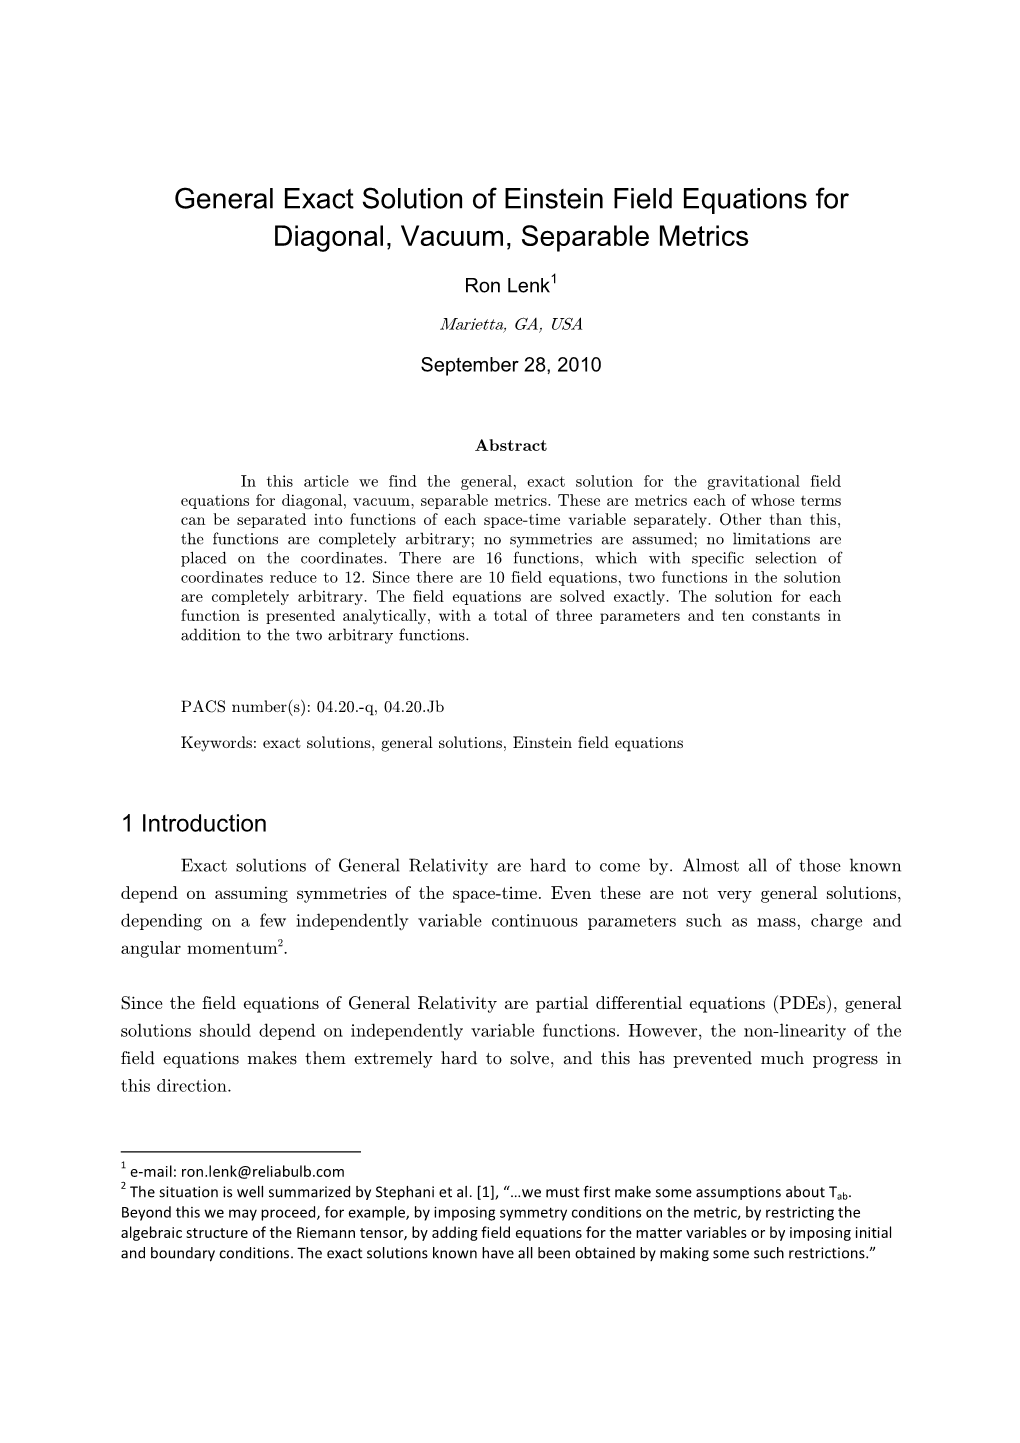 Einstein Field Equations for Diagonal, Vacuum, Separable Metrics